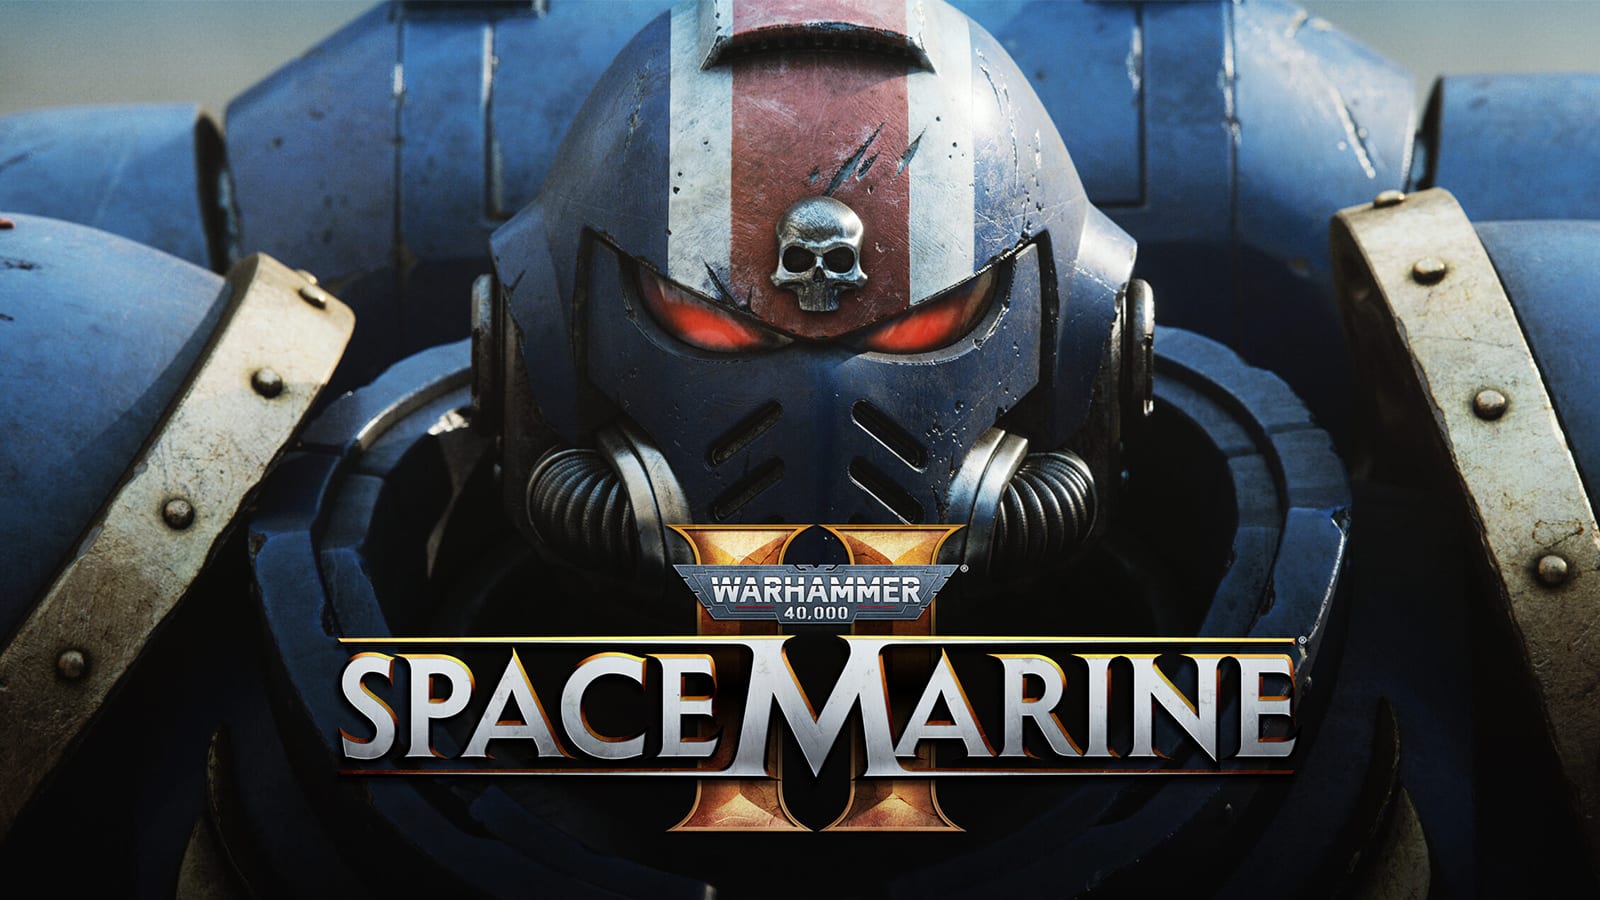 Saber Interactive: لعبة Space Marine 2 هي أفضل لعبة أكشن لهذا العام!